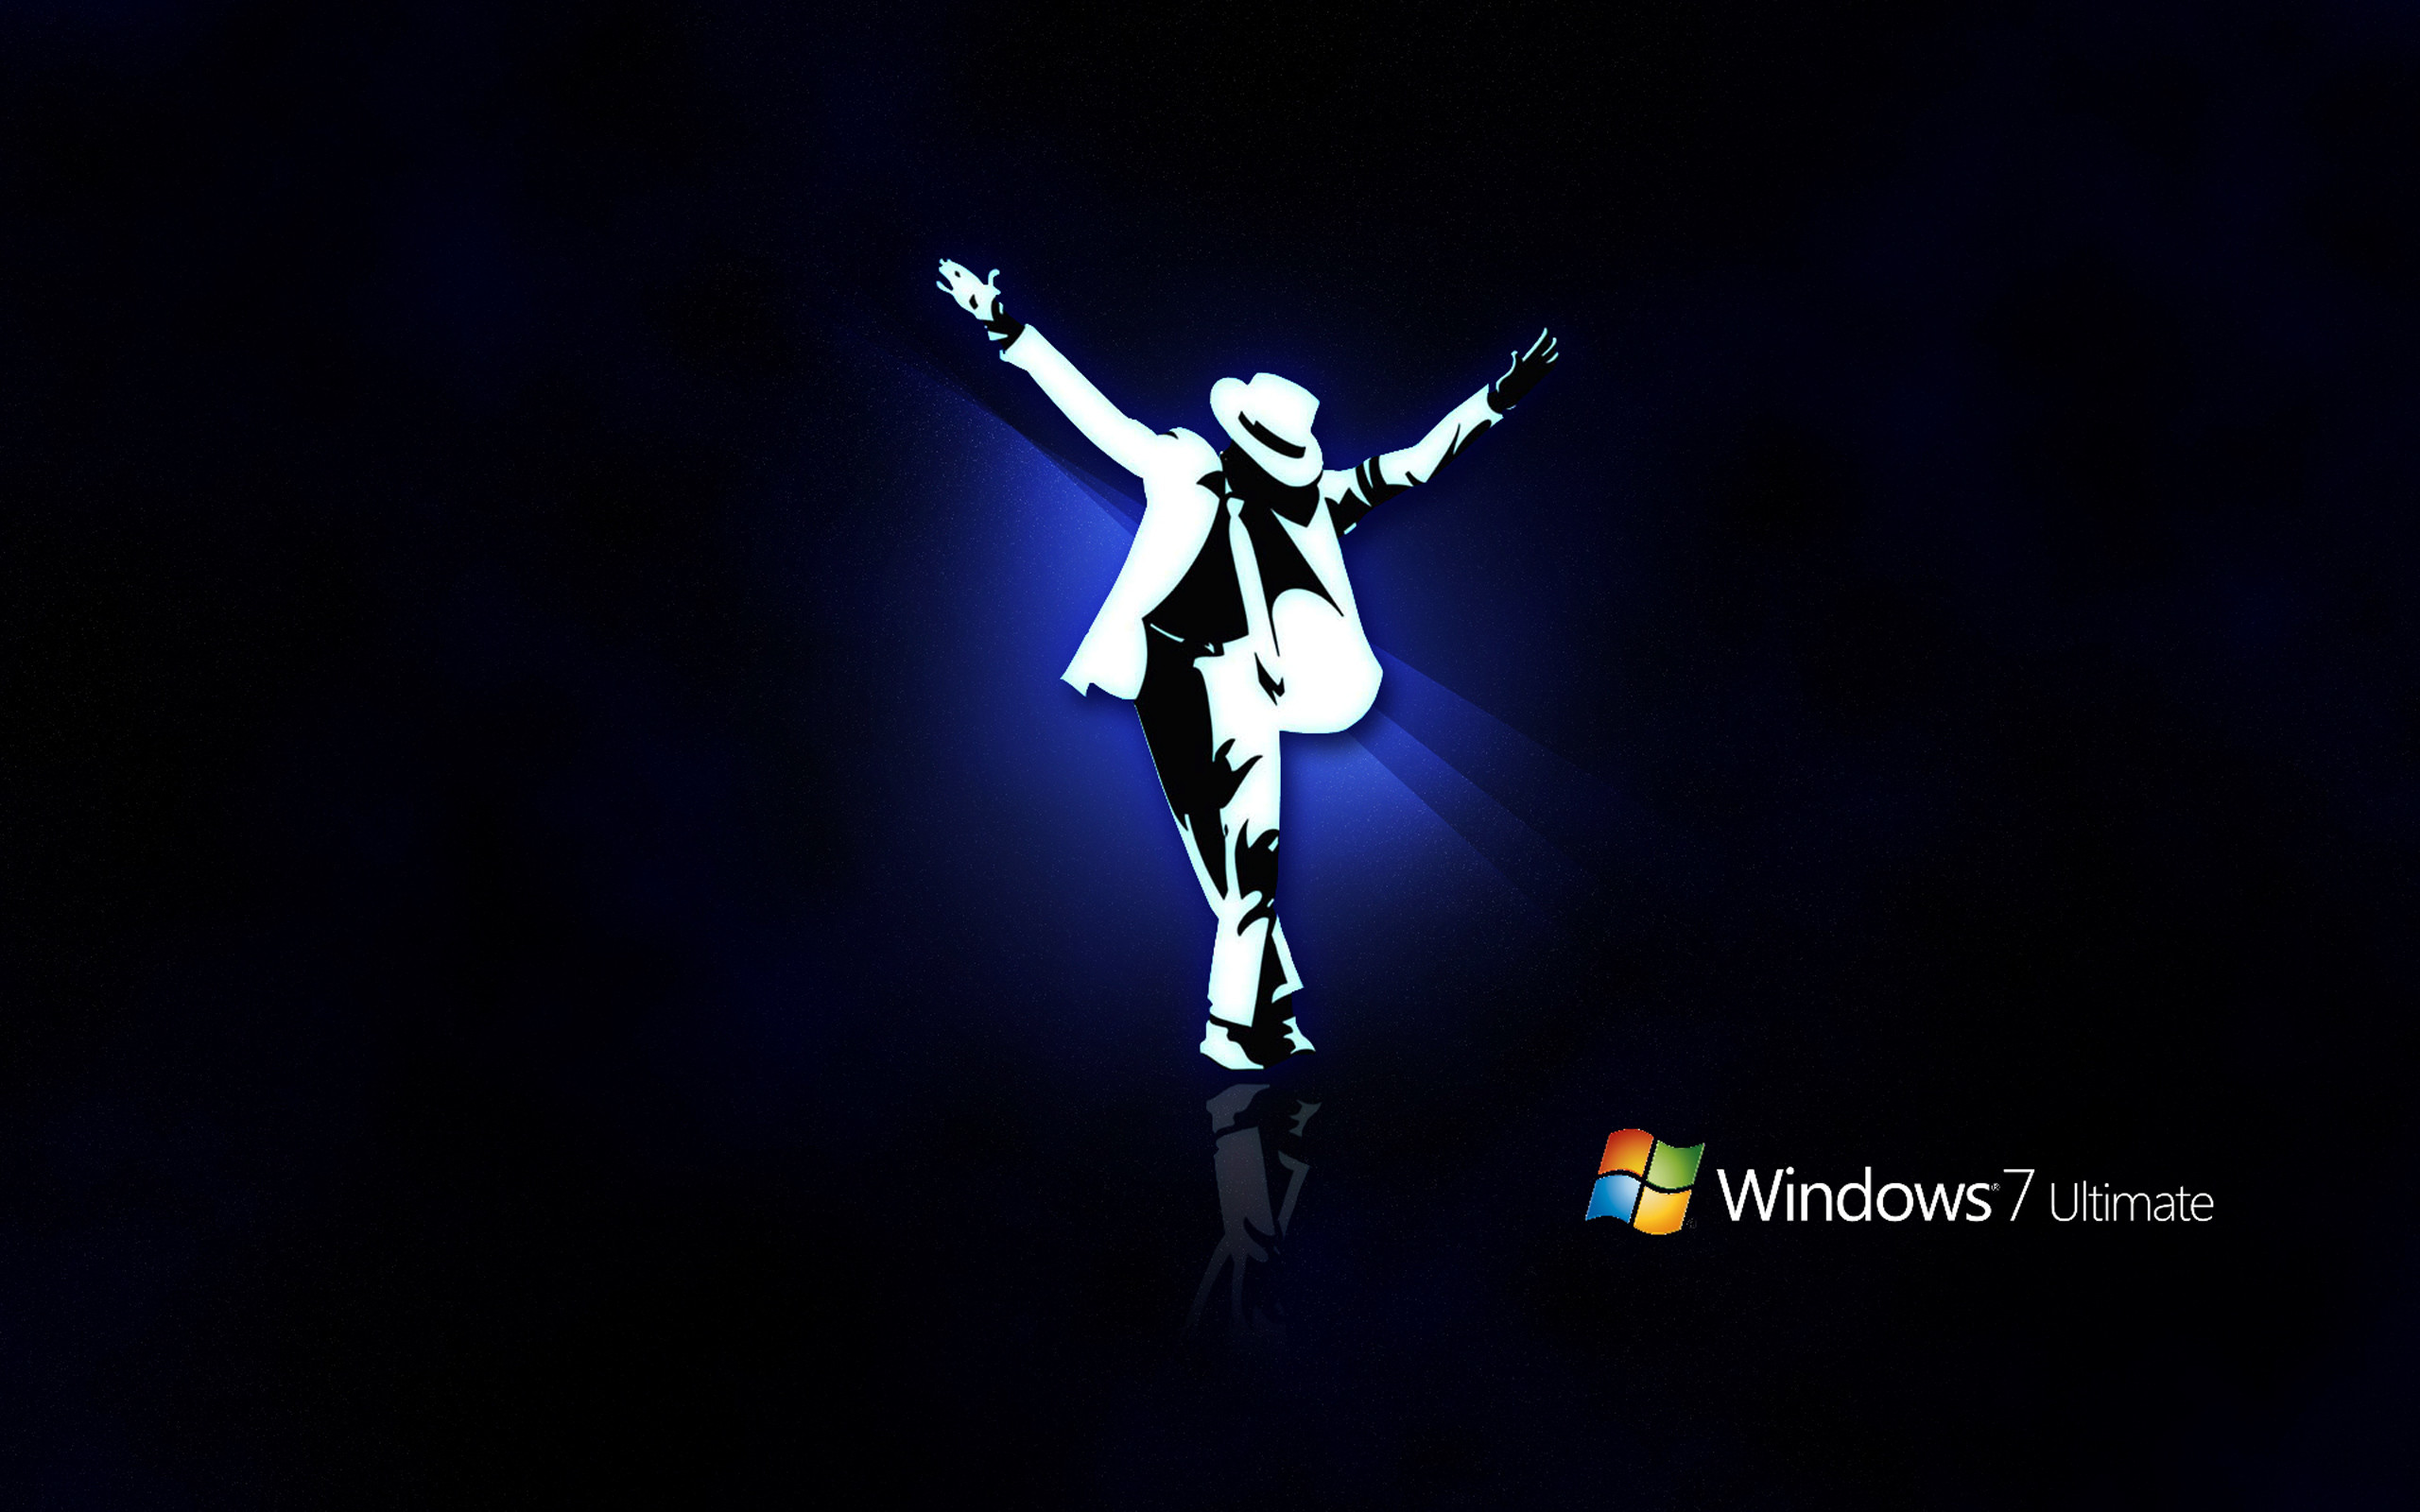 2560x1600 Free Michael Jackson Windows 7 Ultimate, computer desktop wallpapers,  pictures, images